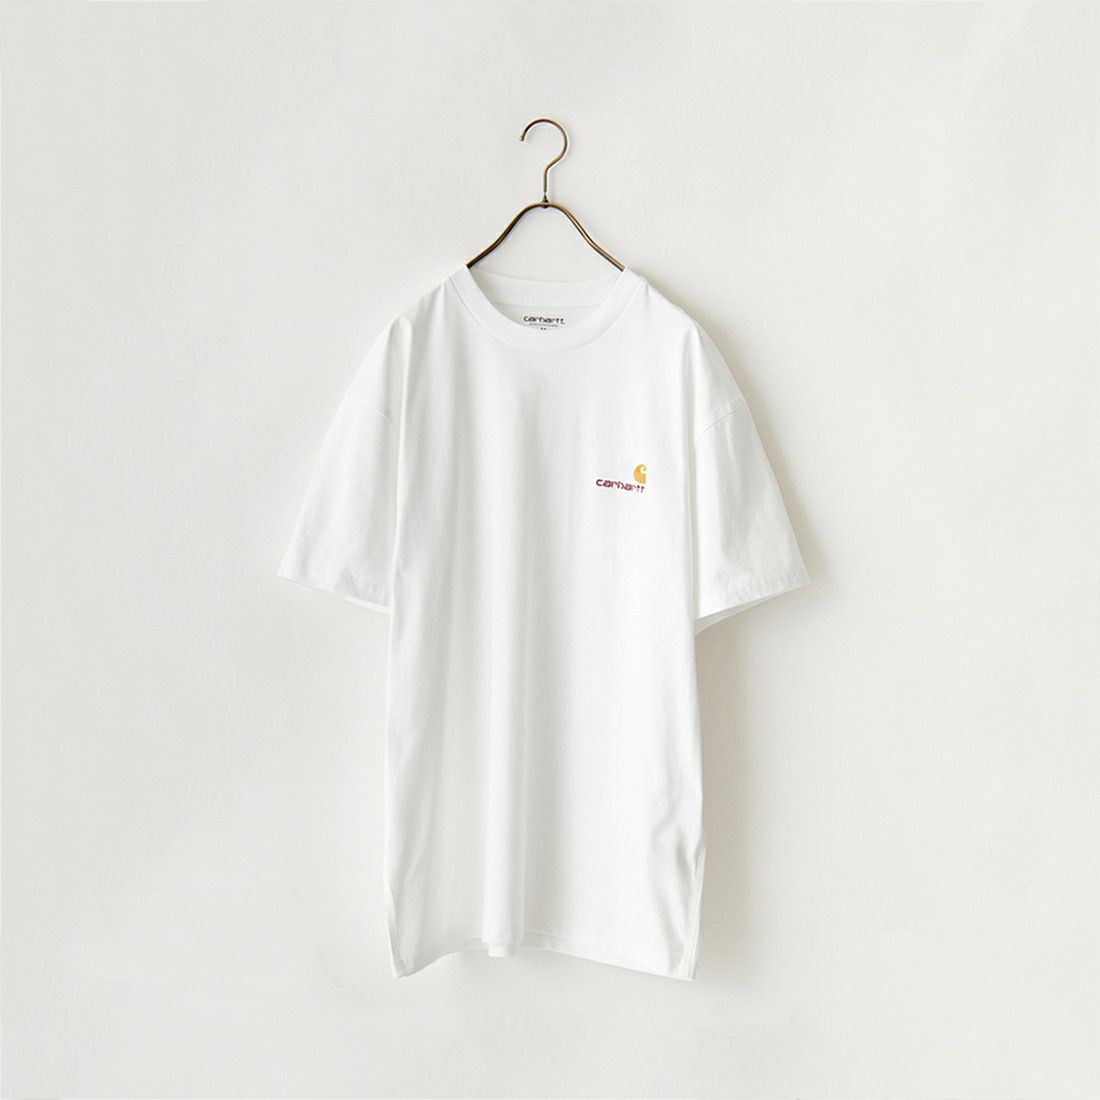 carhartt WIP [カーハートダブリューアイピー] ショートスリーブアメリカンスクリプトTシャツ [I029956] WHITE